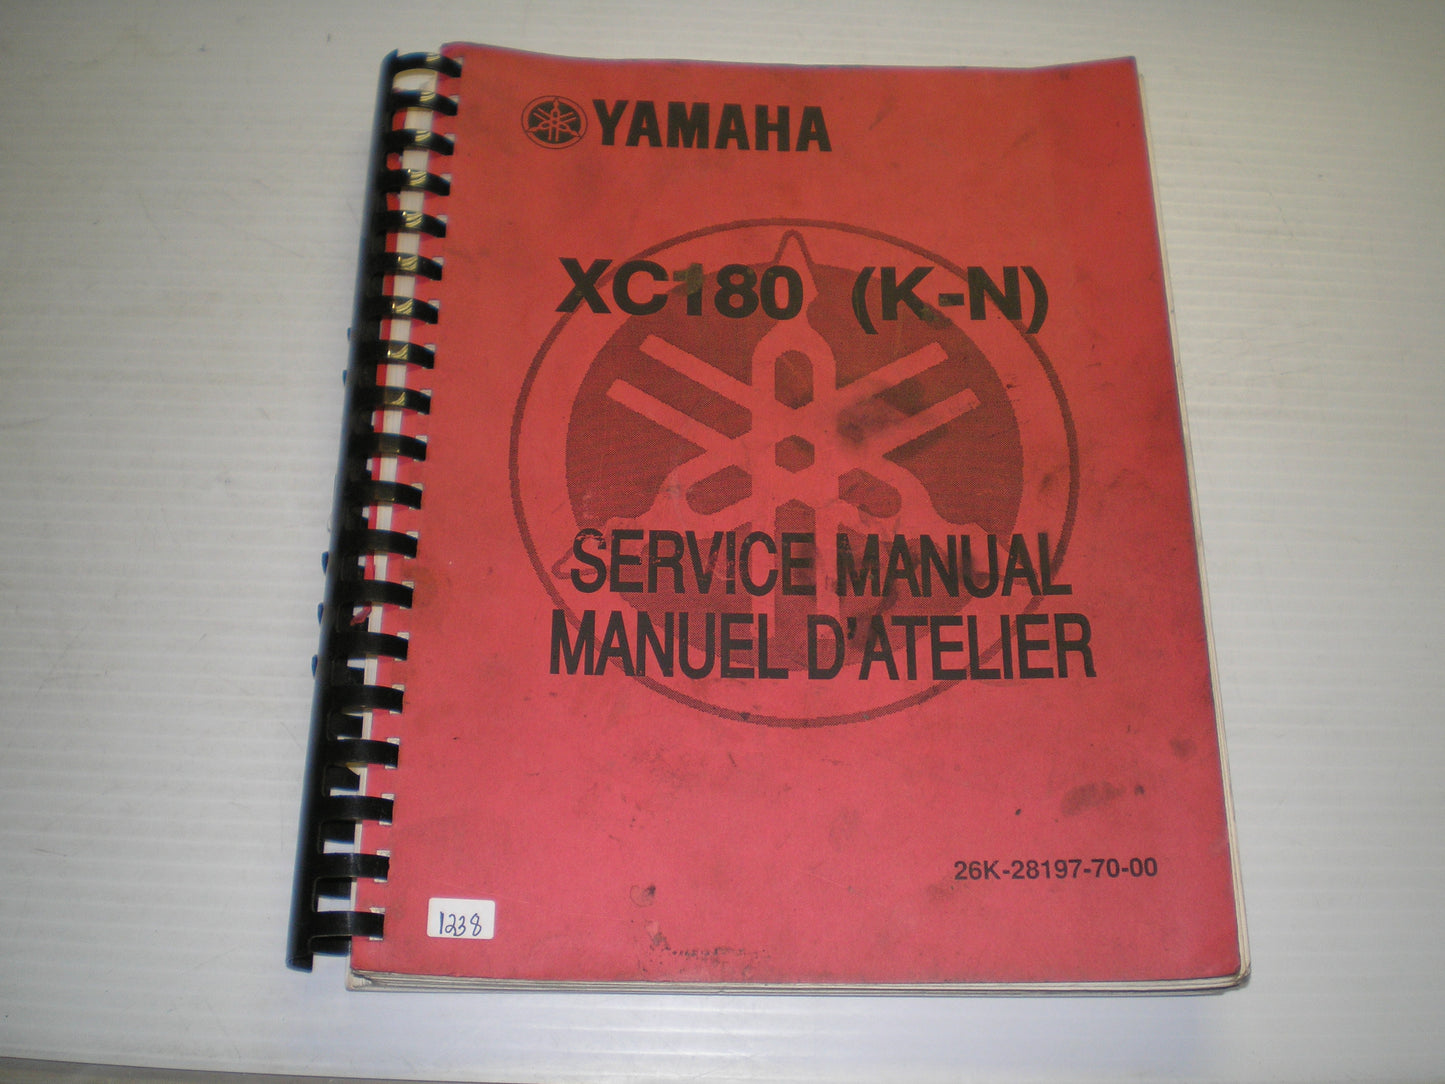 YAMAHA XC180 K-N  Riva Scooter  1983  Service Manual  26K-28197-70  #1238